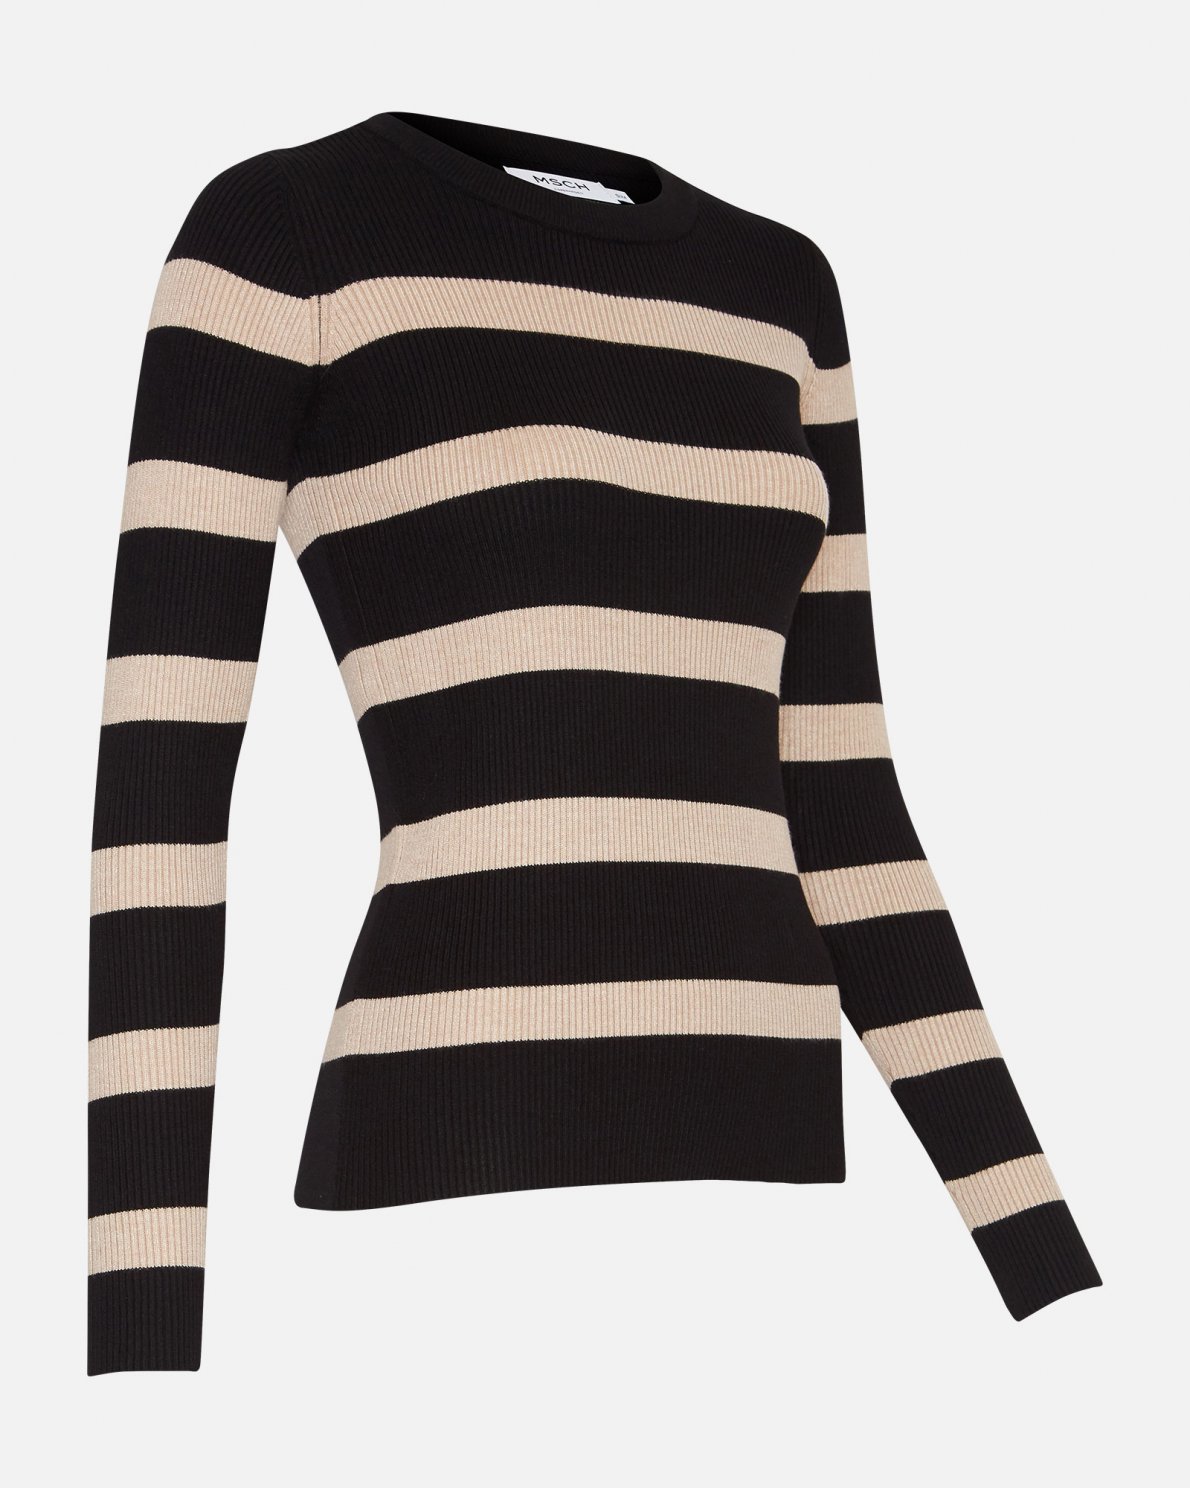 Harike Black Stripe Pullover side